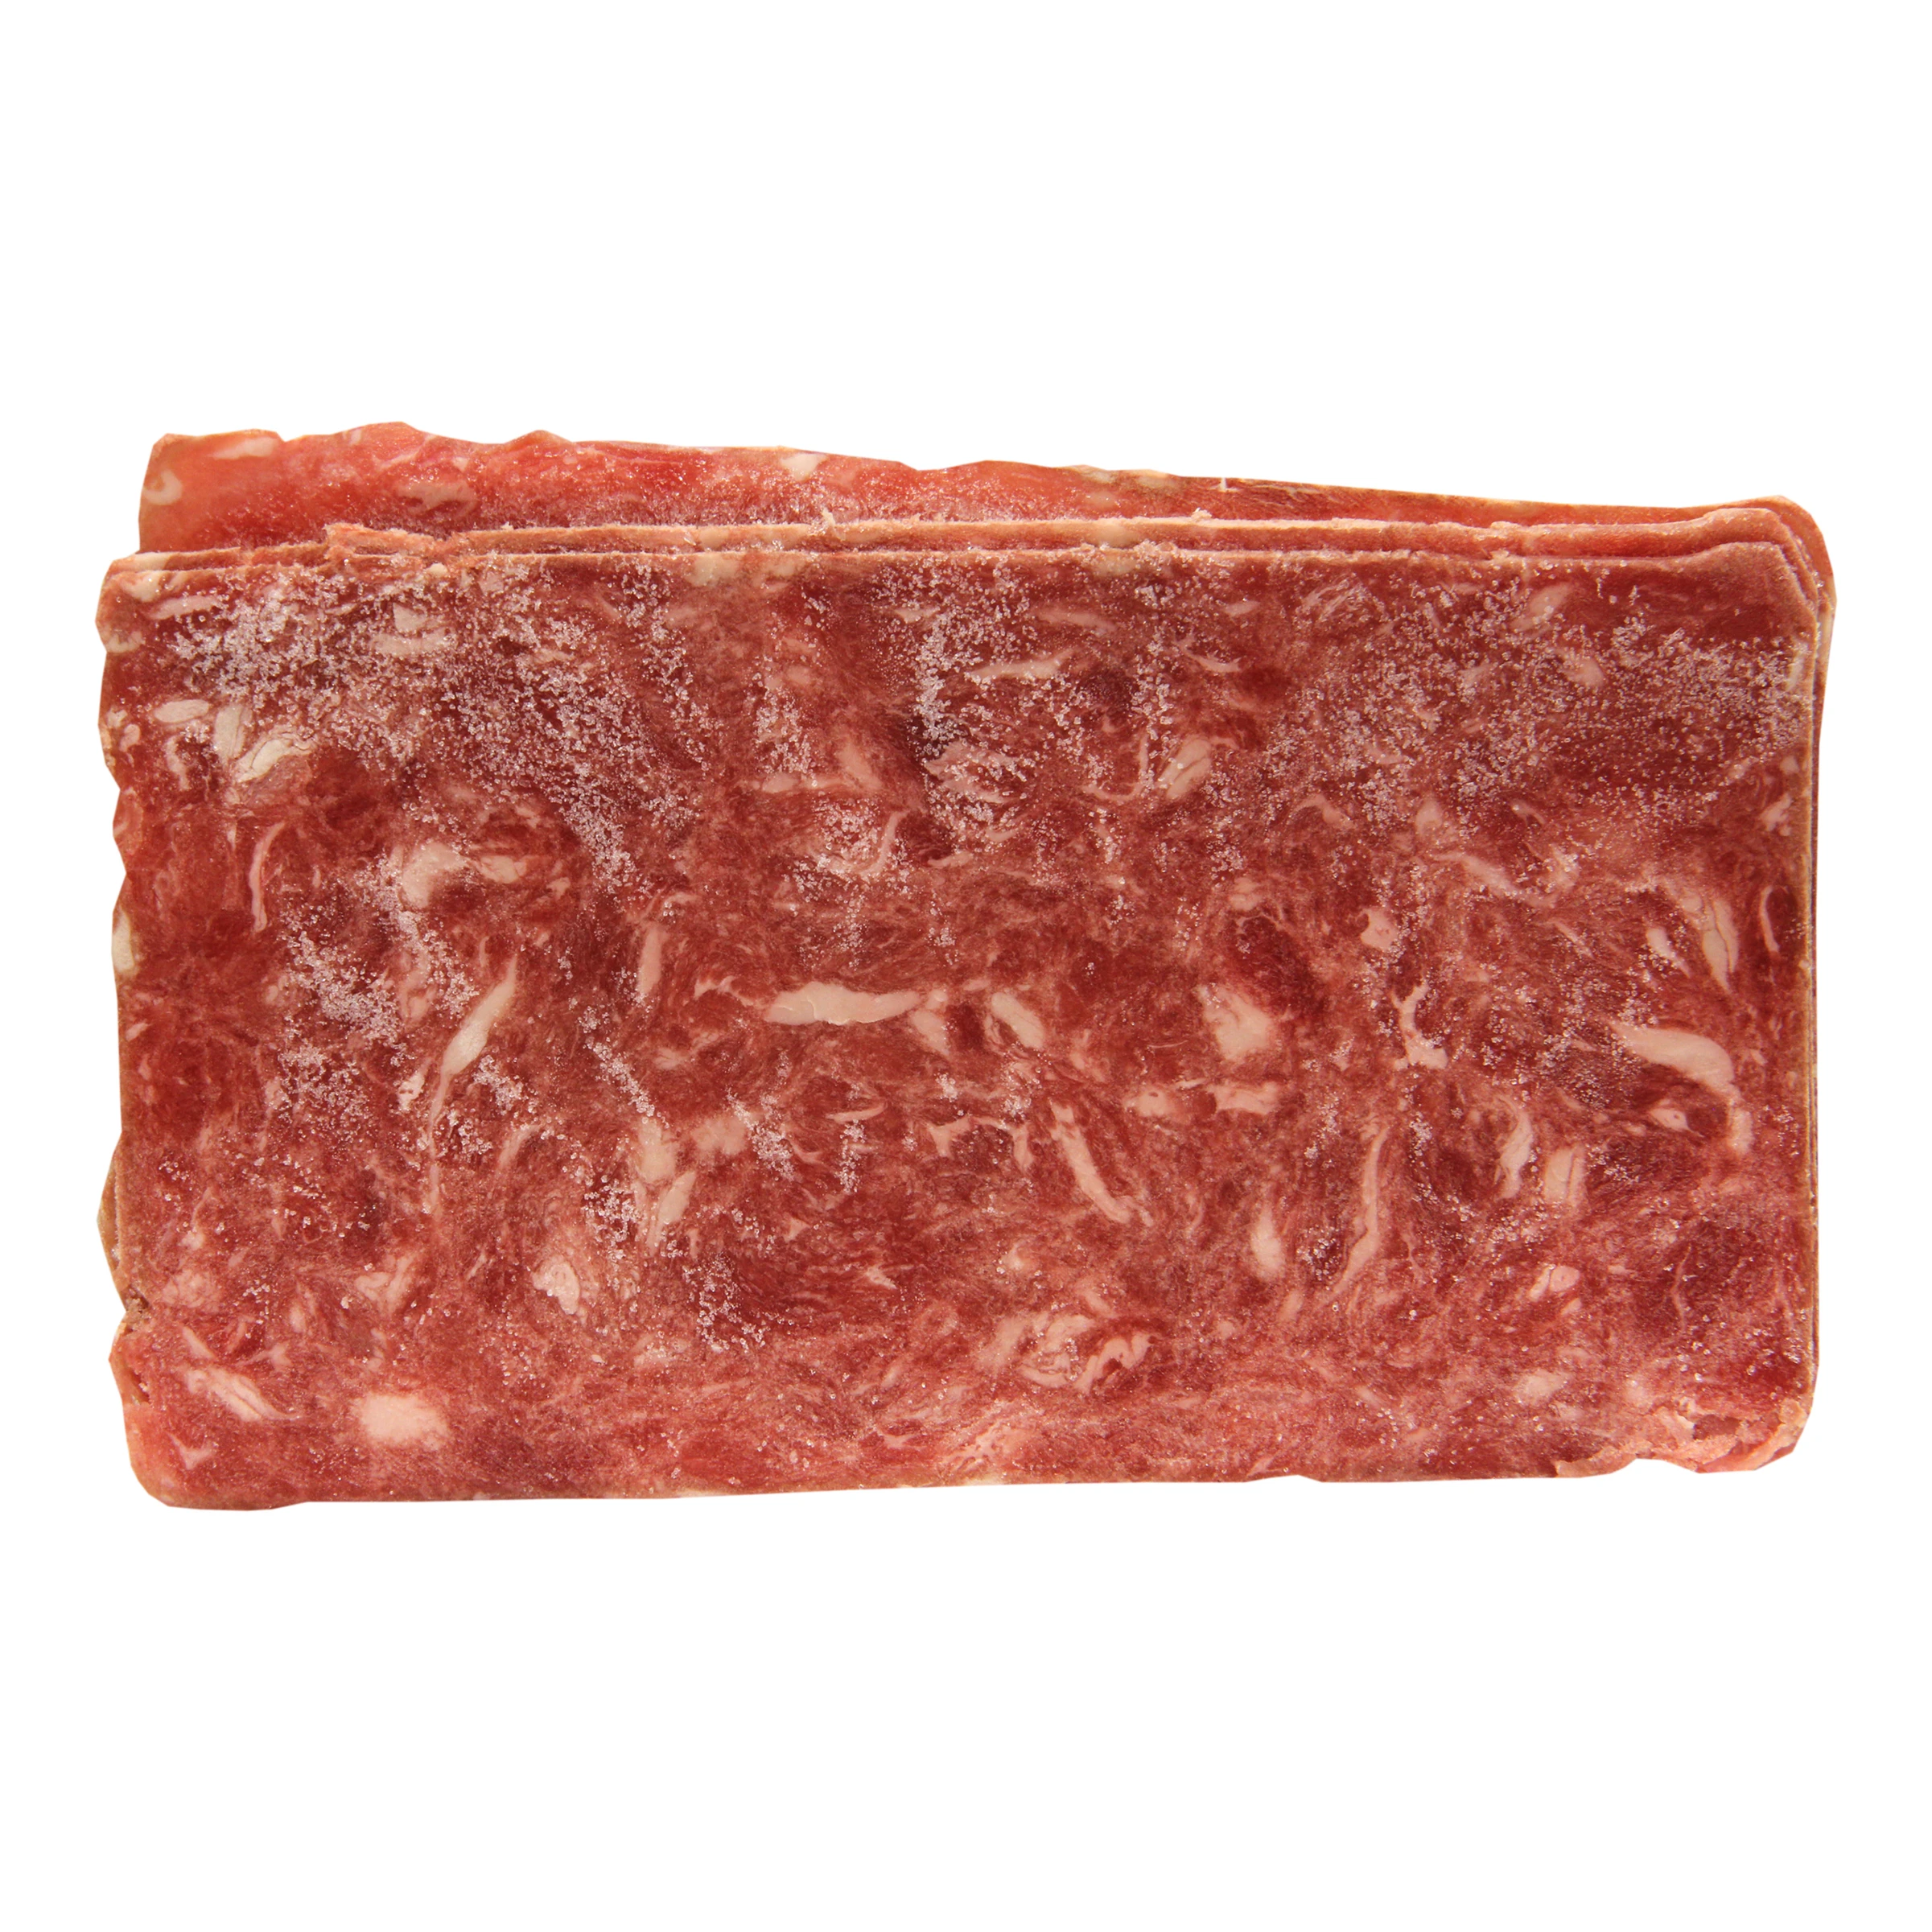 Philly Freedom® Gold Traditional Beef Flat Steak, Lightly Marinated, 4 oz, 10 Lbshttp://images.salsify.com/image/upload/s--bYdXbWz5--/wvxtc3a5ughegxieptm1.webp